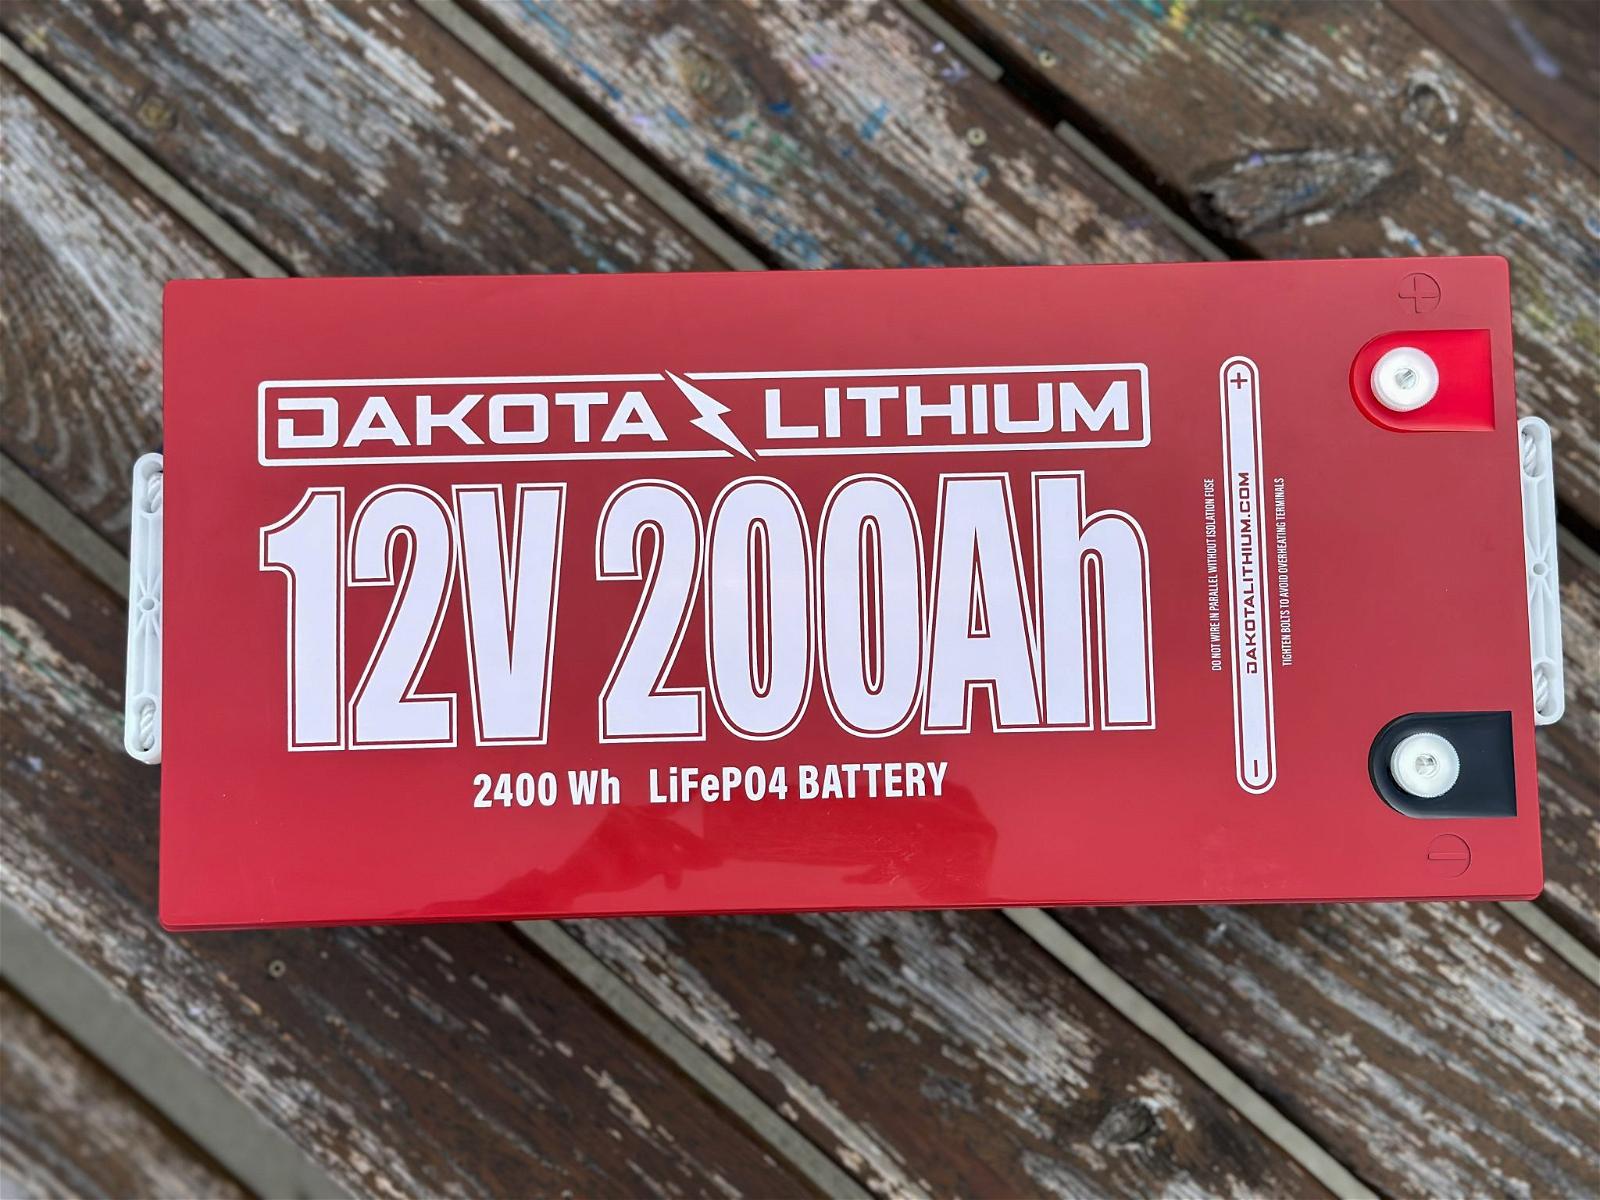 Dakota Lithium 12V 200Ah RV Battery